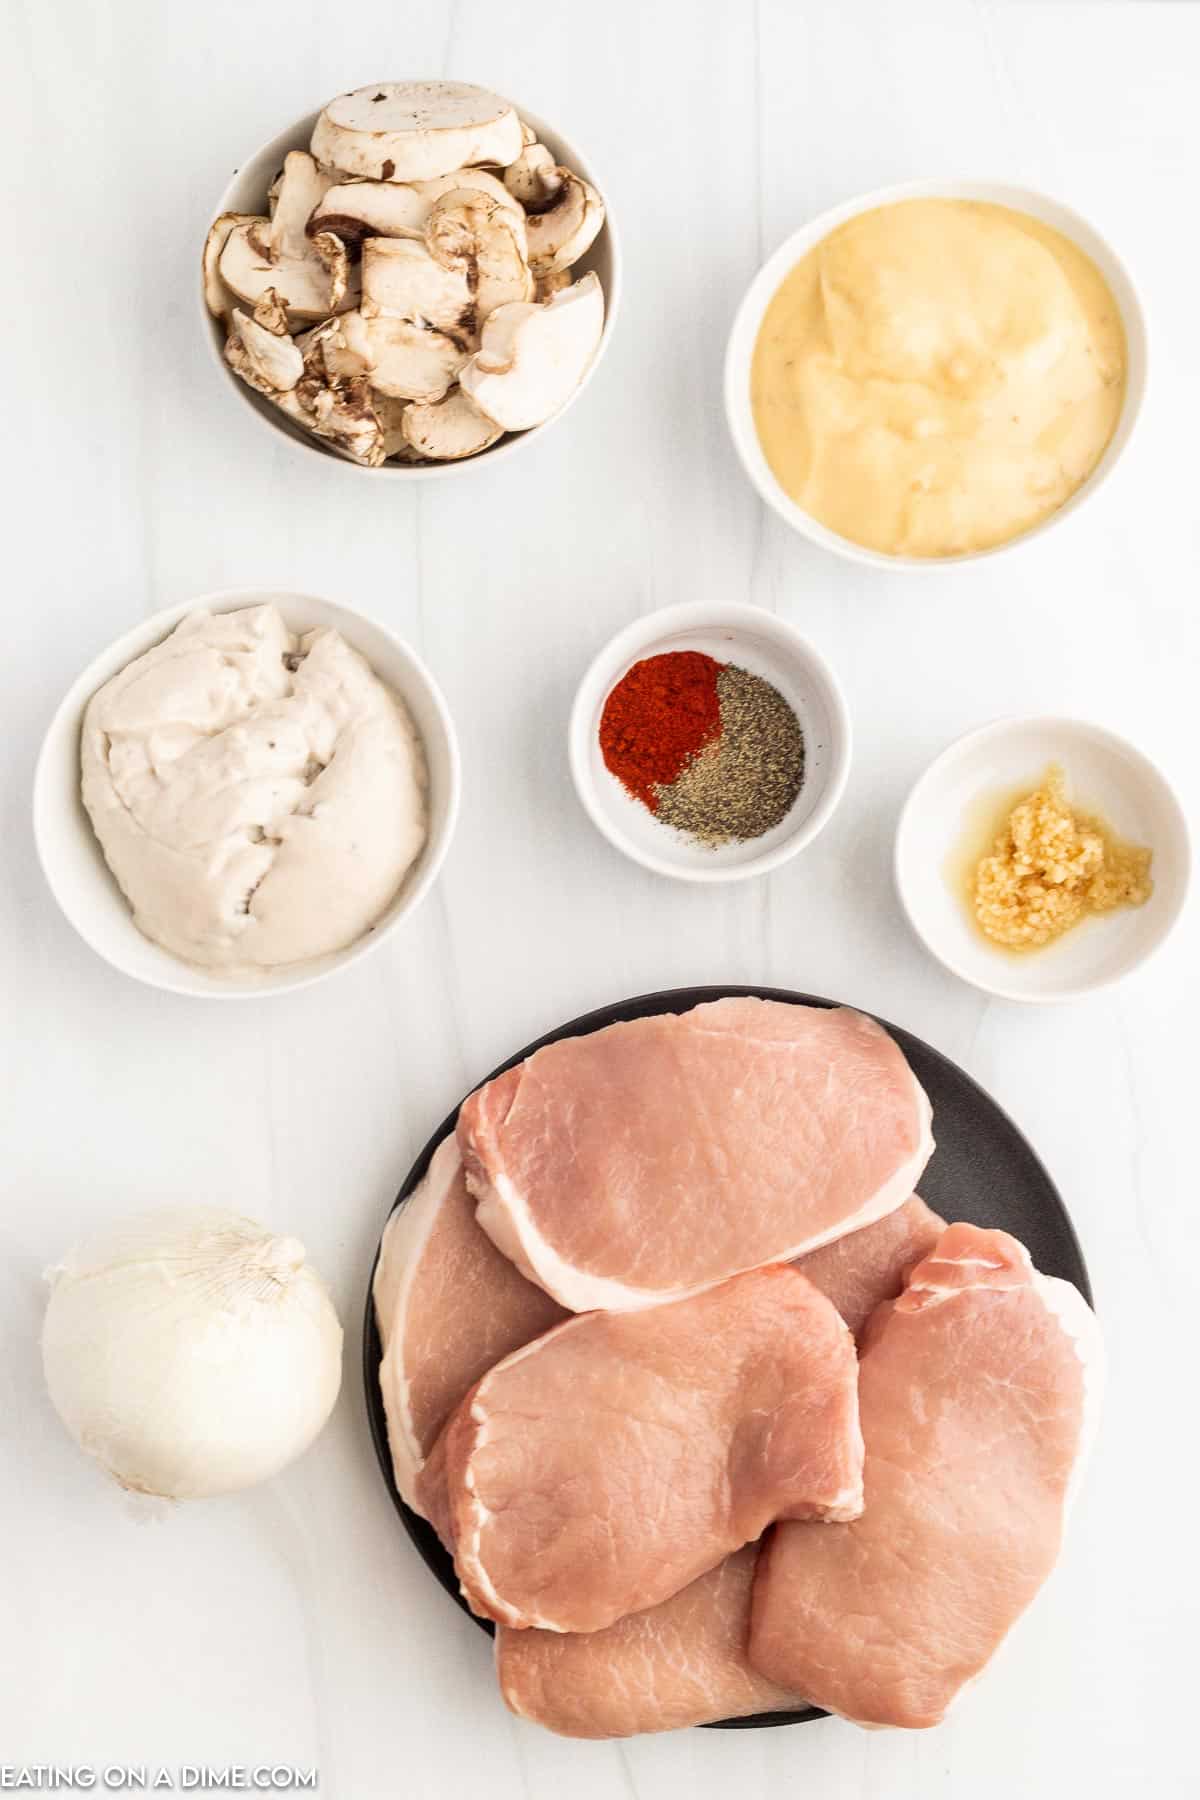 Ingredients - Slice Mushrooms, cream of chicken soup, cream of mushroom soup, minced garlic, boneless pork chops, beef broth, paprika, pepper